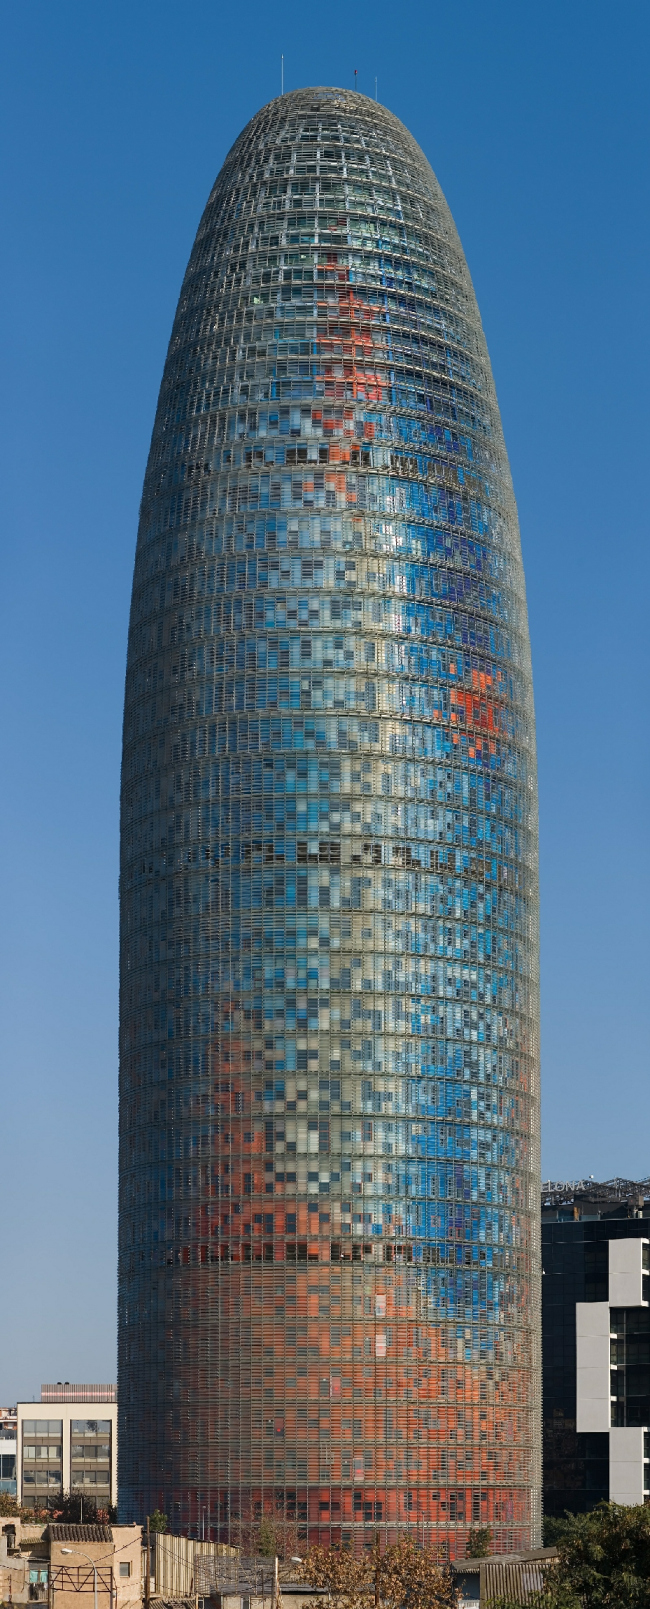 Башня Агбар. Фото: Diliff via Wikimedia Commons. Лицензия CC BY 2.5